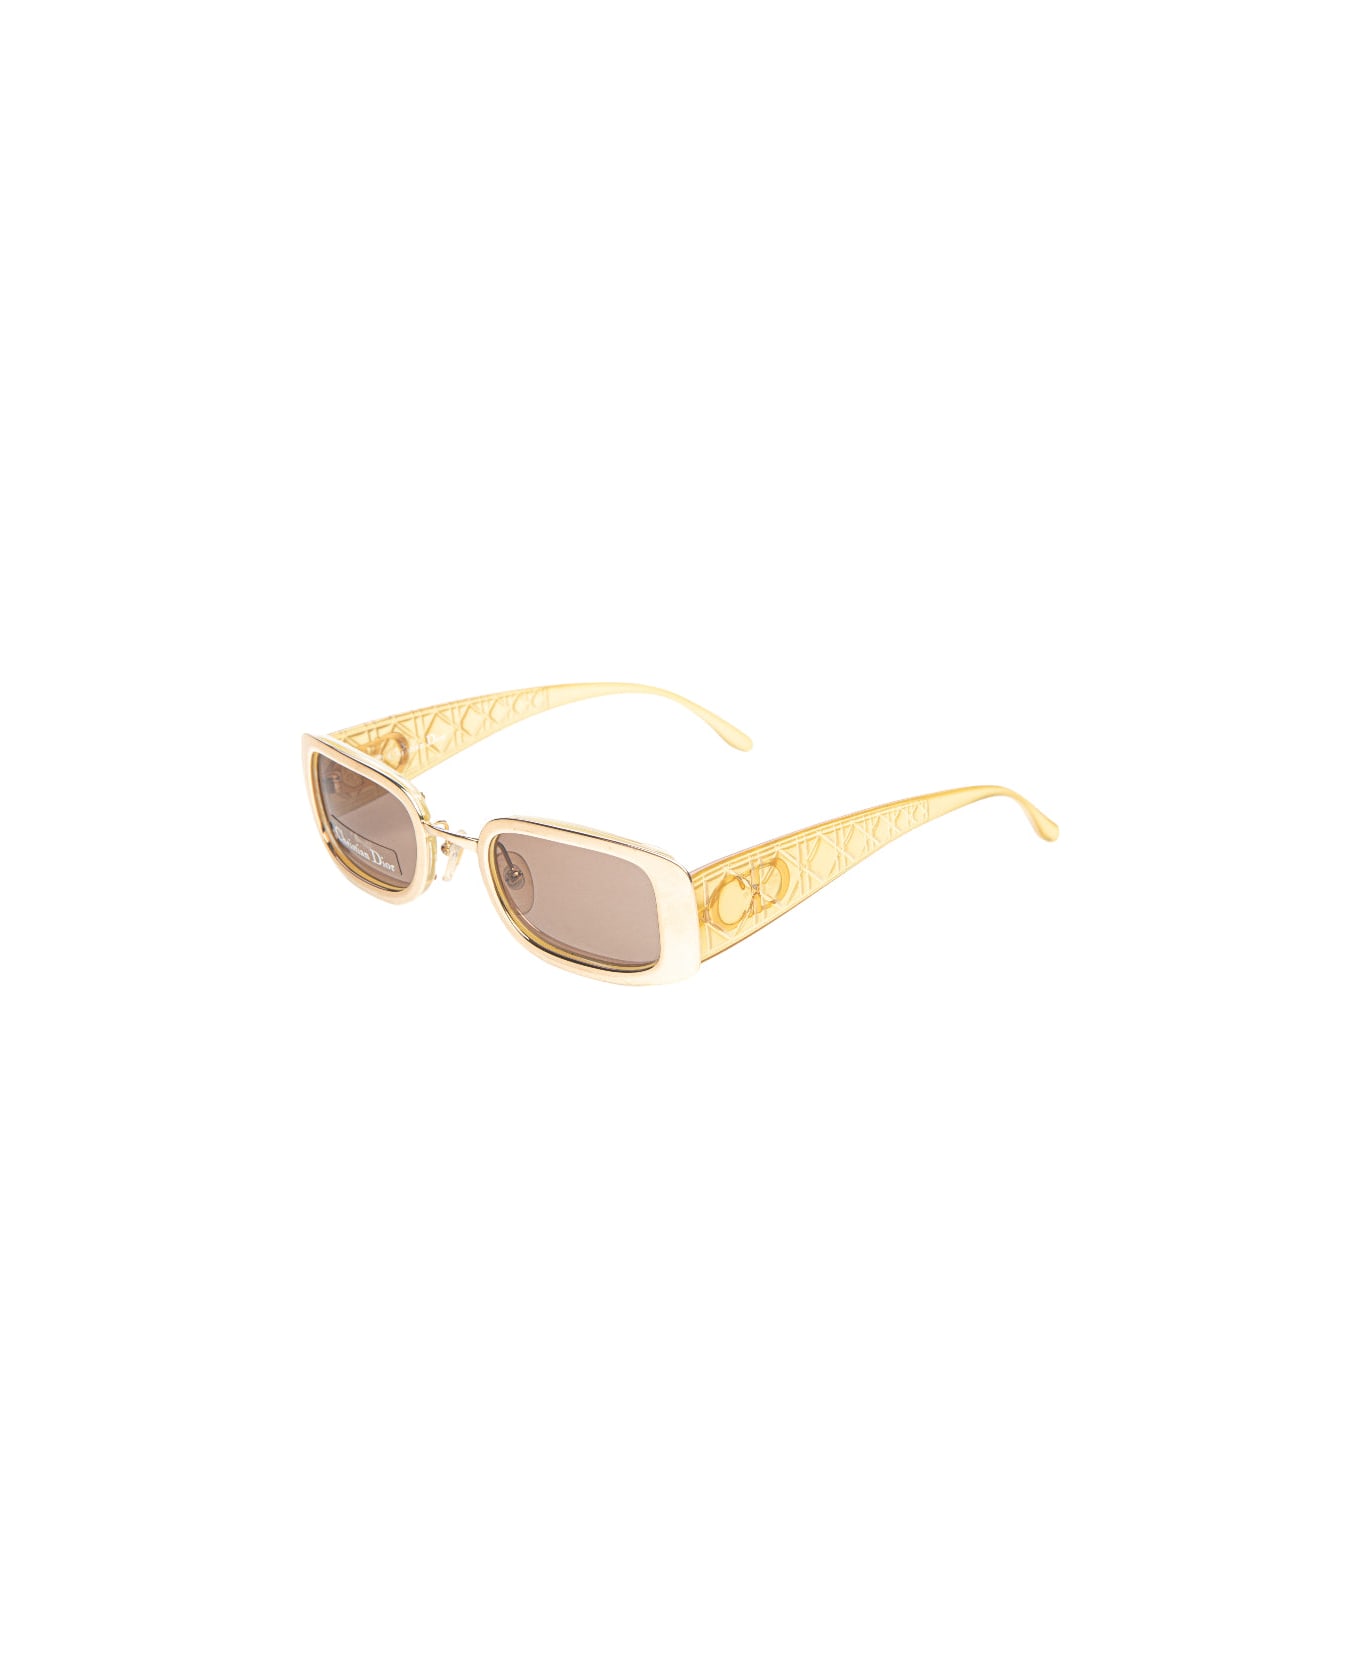 Dior Eyewear Ice - Limited Edition - Gold Sunglasses